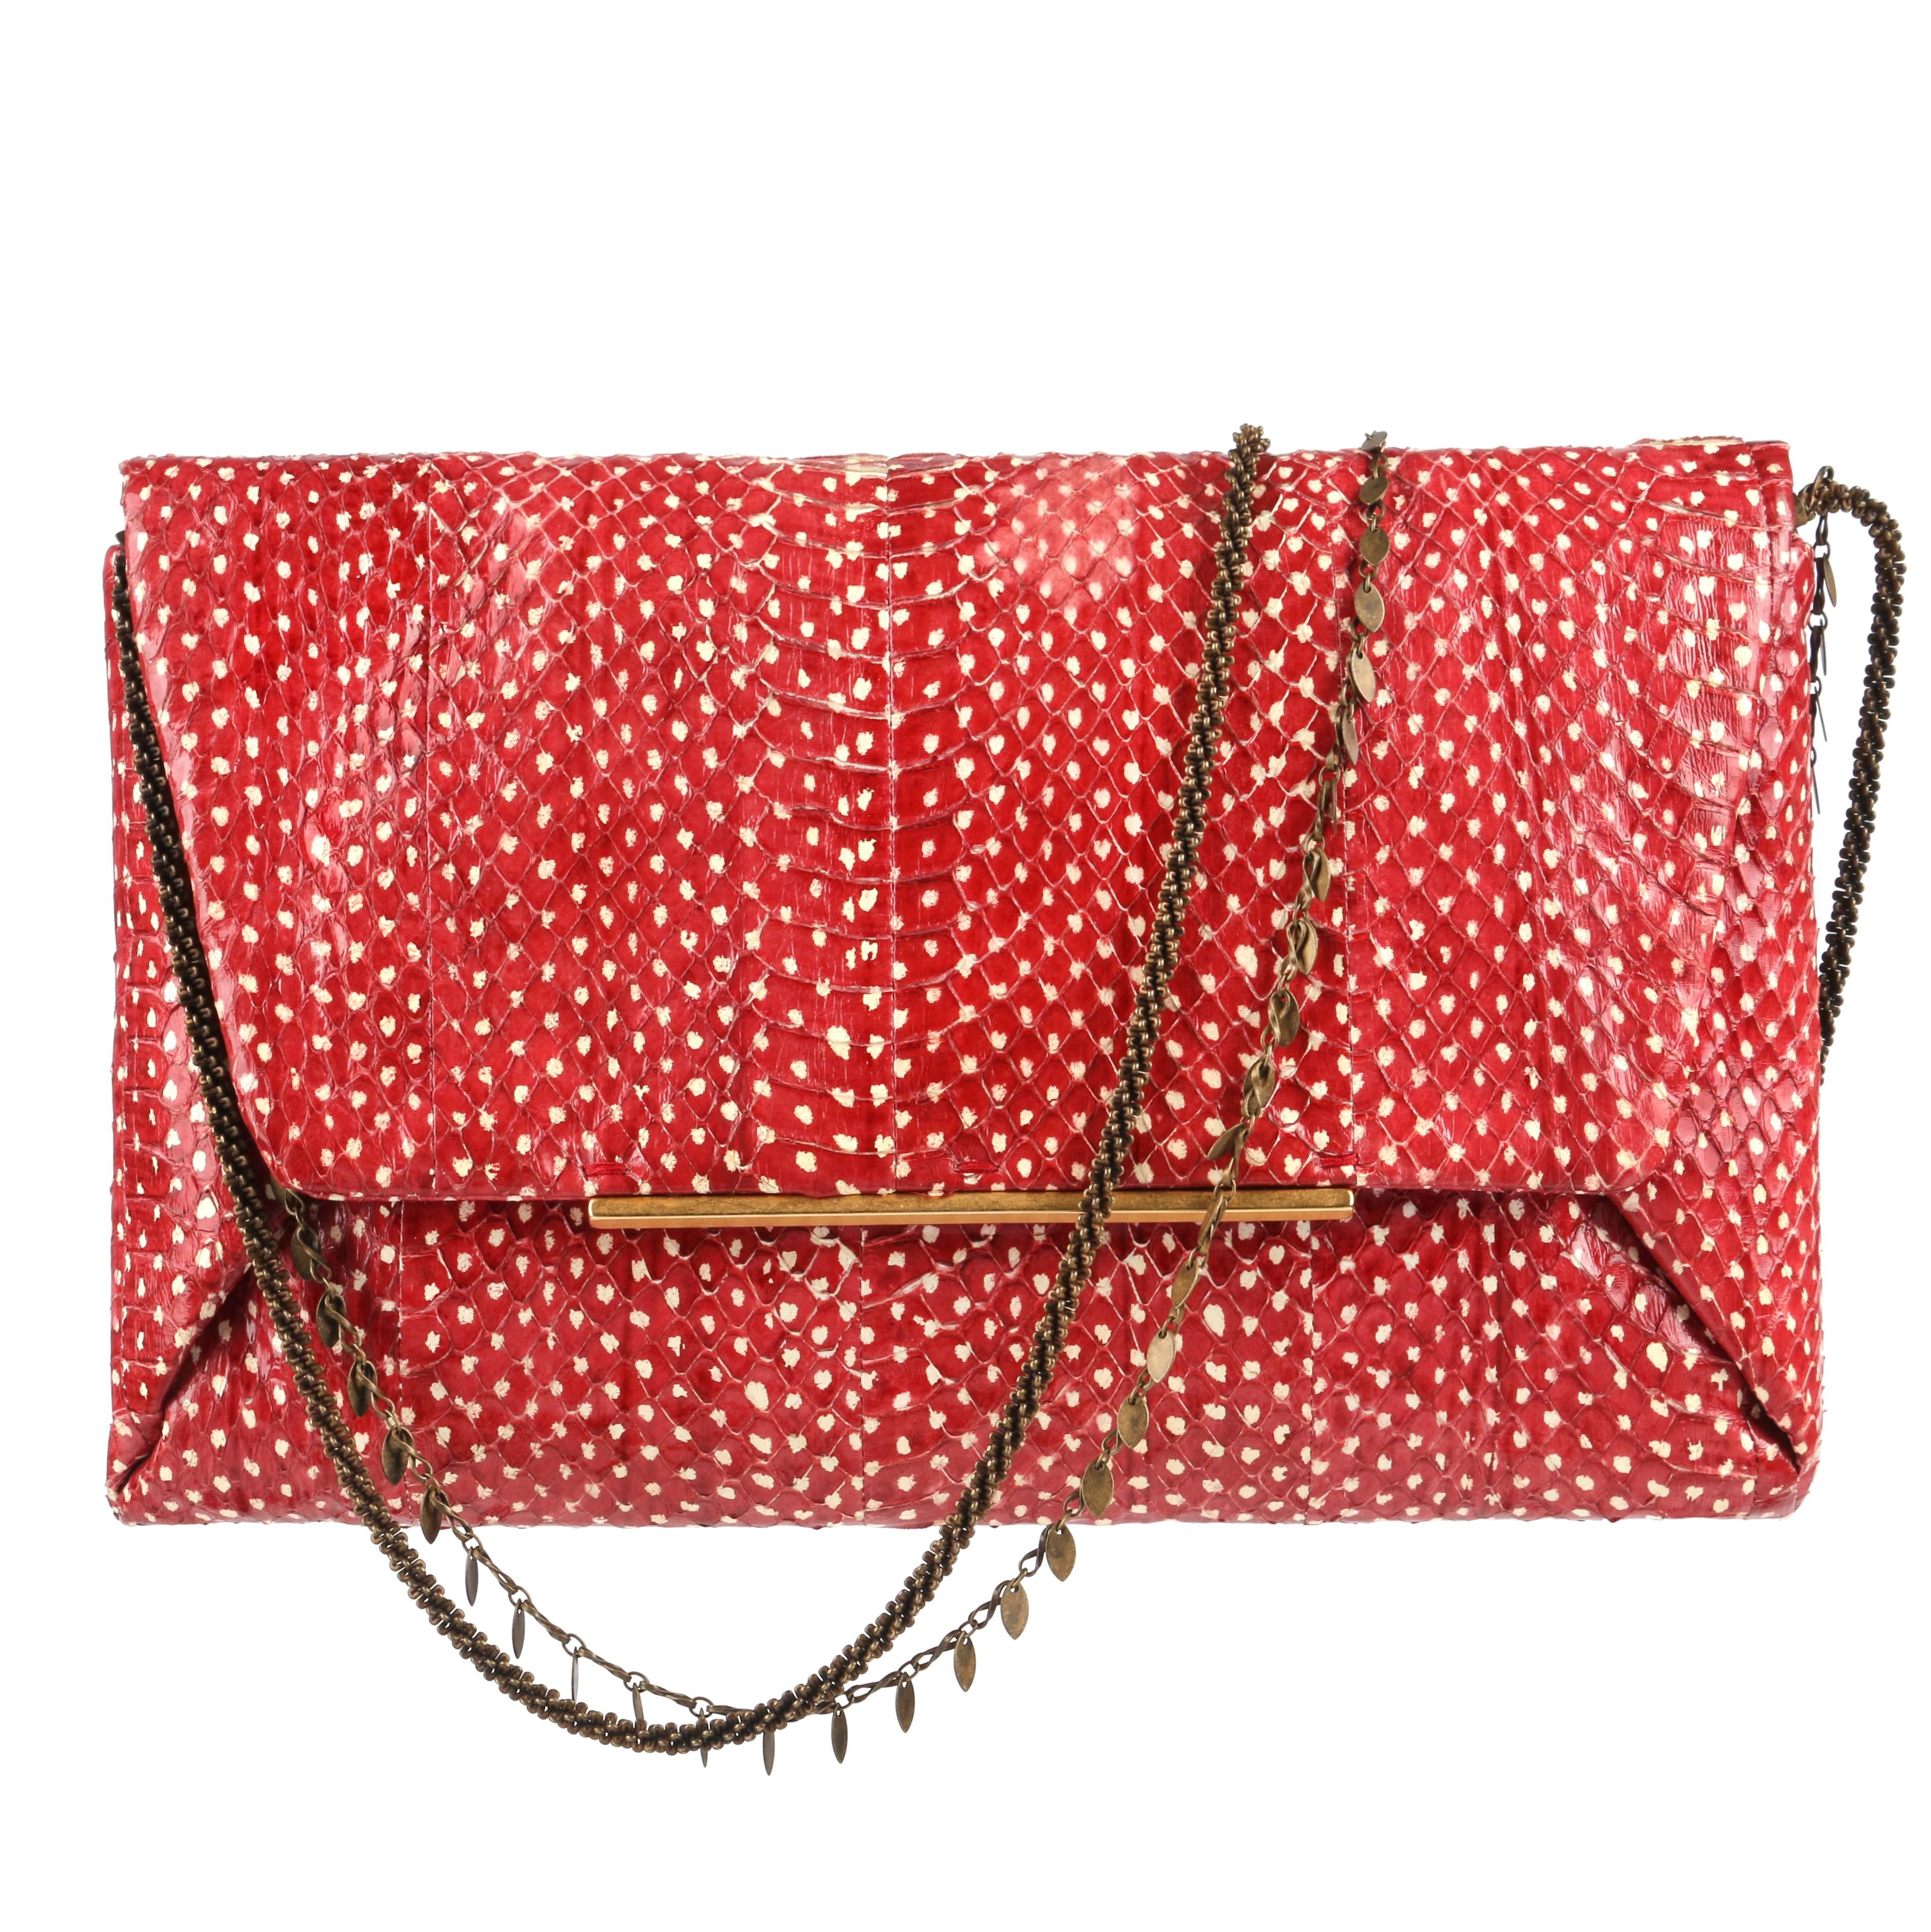 LANVIN "Mai Tai" Red Genuine Python Snakeskin Envelope Clutch Handbag Purse